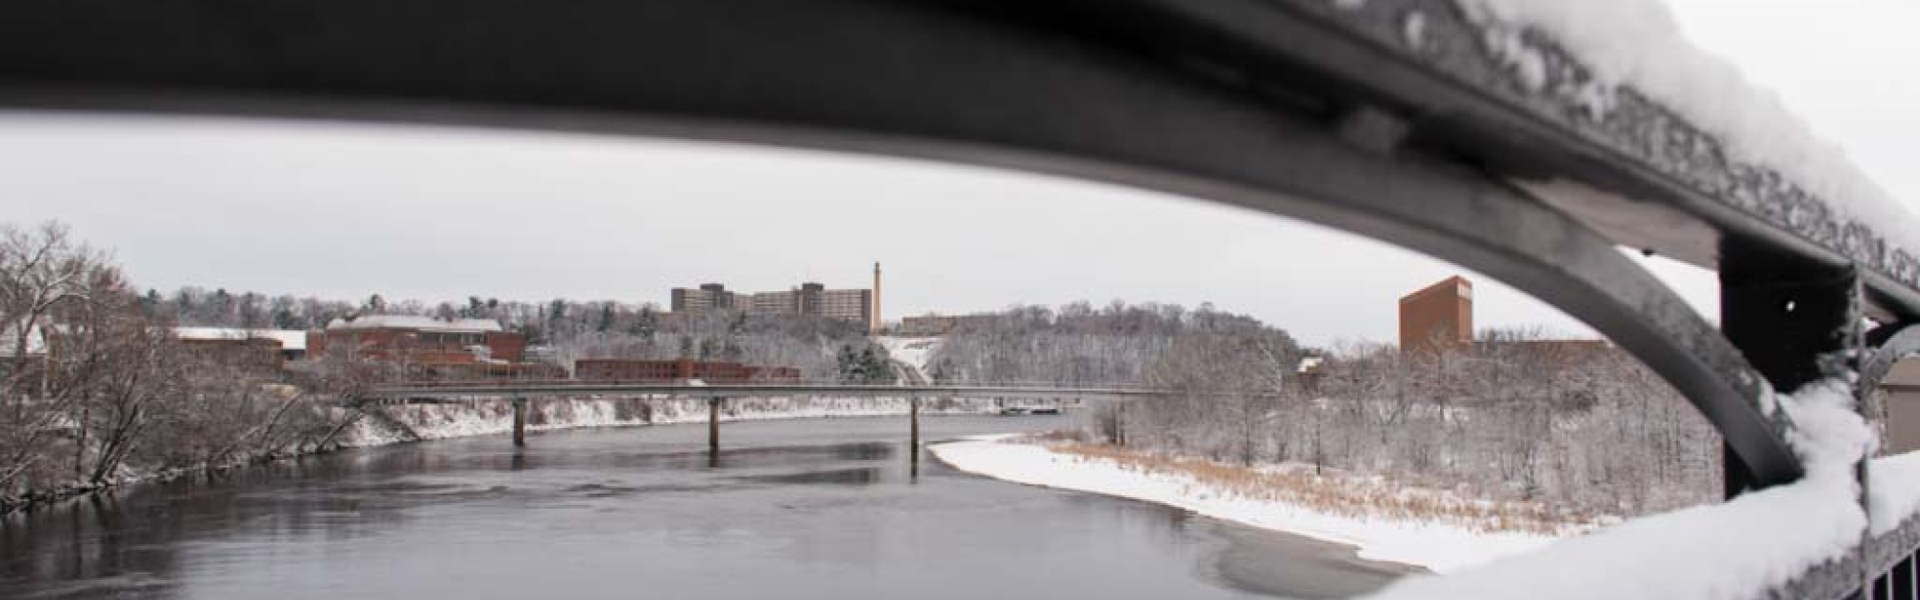 Campus winter scene from Water Street bridge